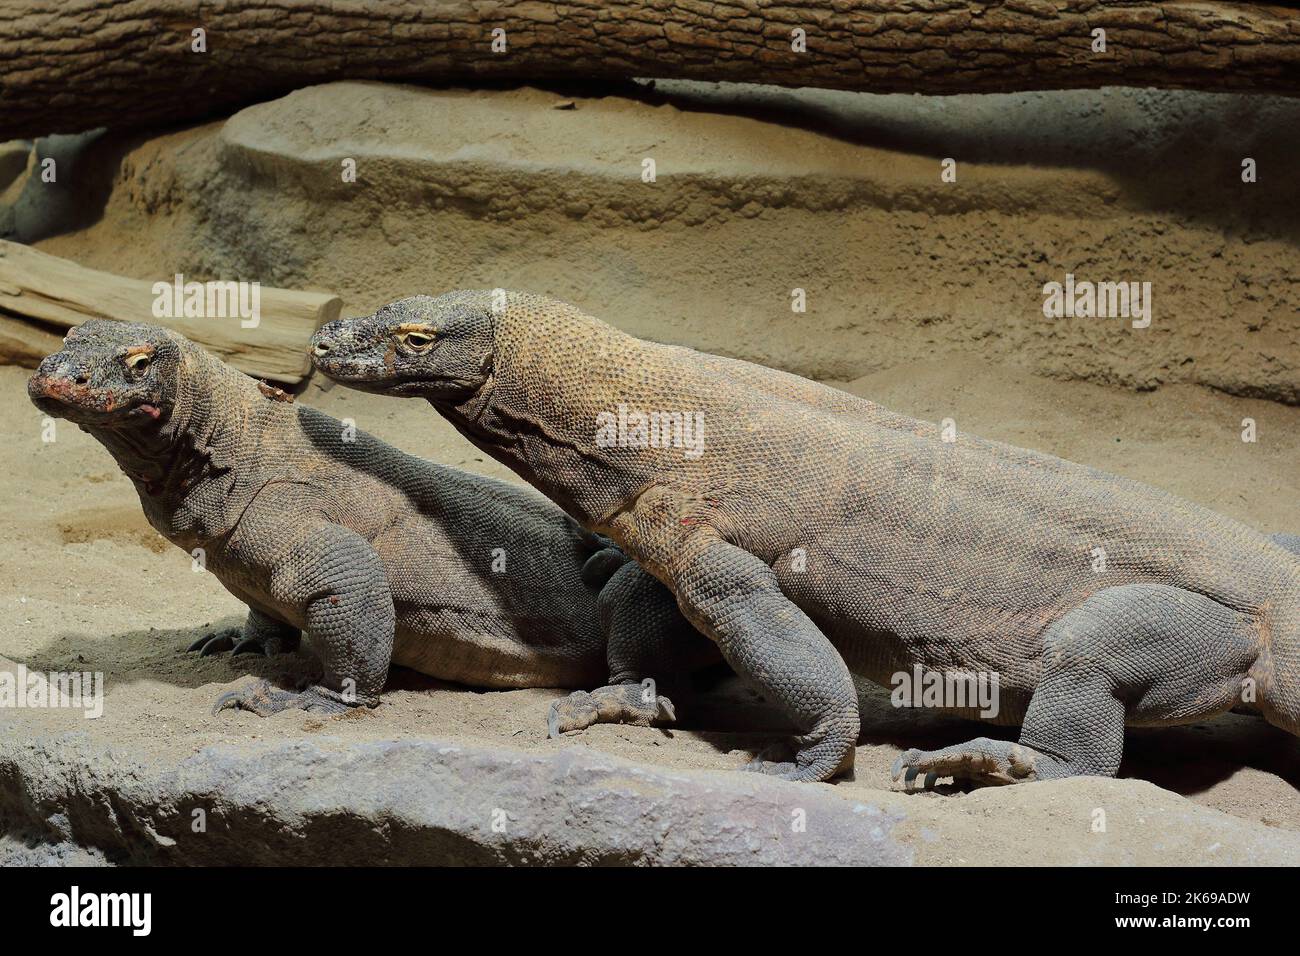 The Komodo dragon, Komodo monitor (Varanus komodoensis) in a natural habitat Stock Photo